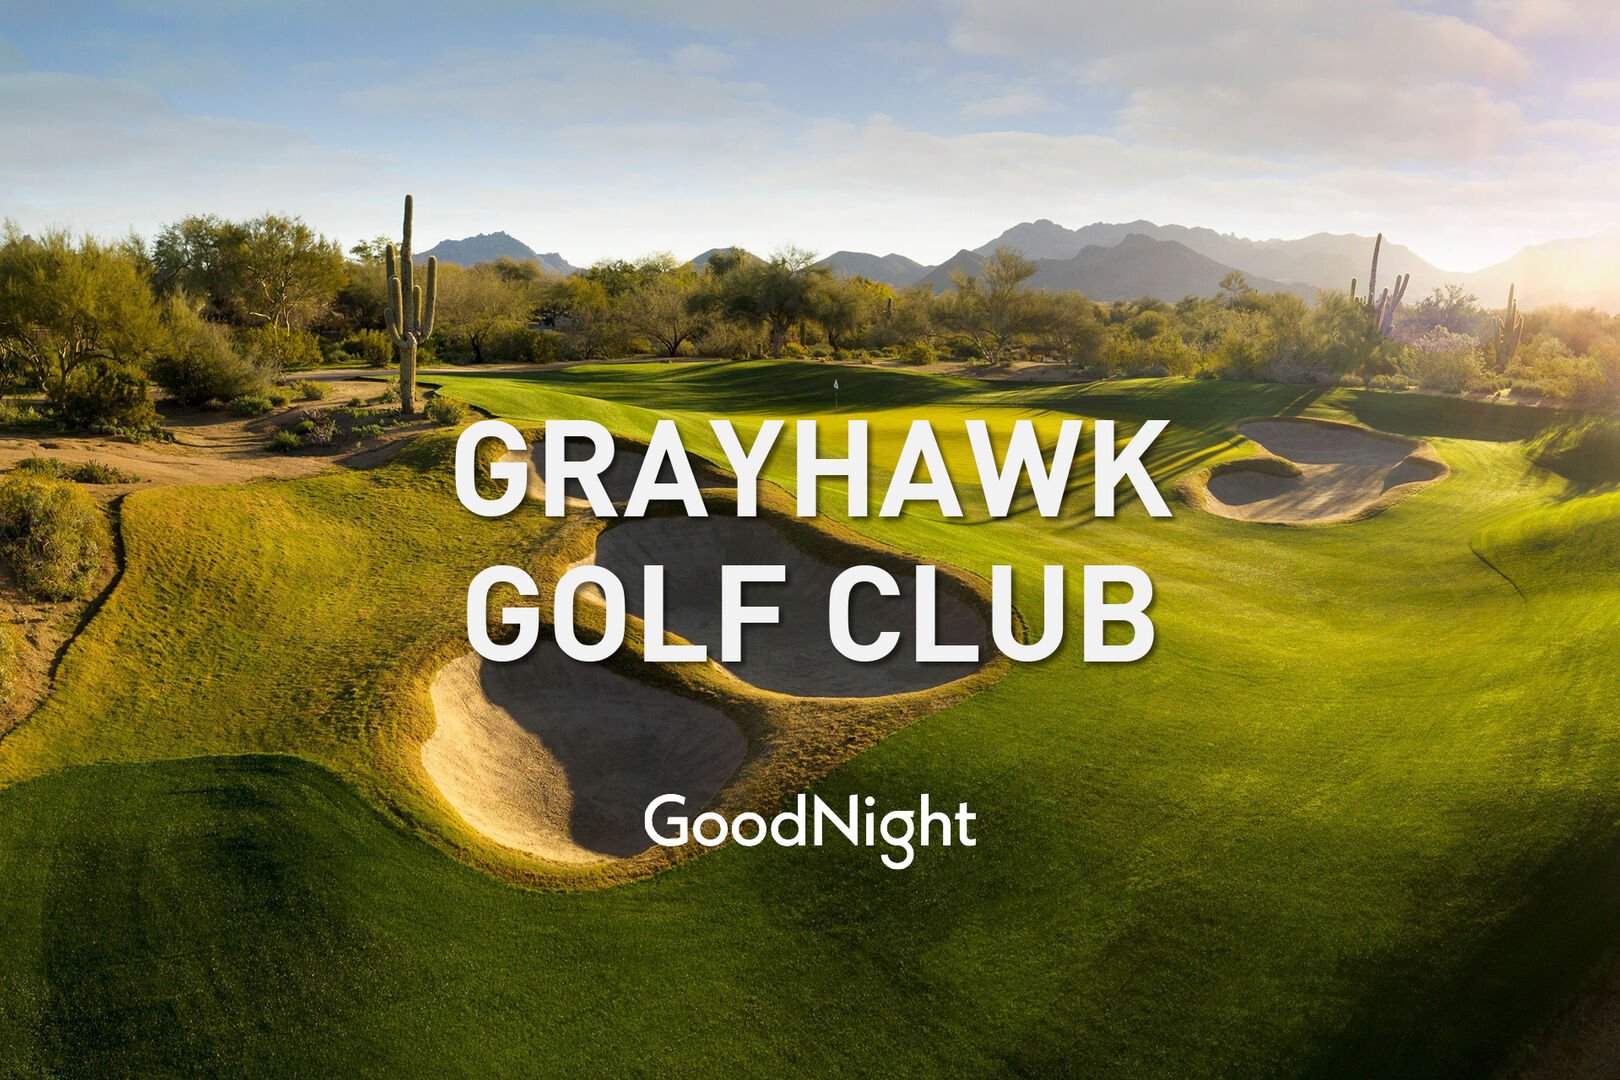 16 mins: Grayhawk Golf Club